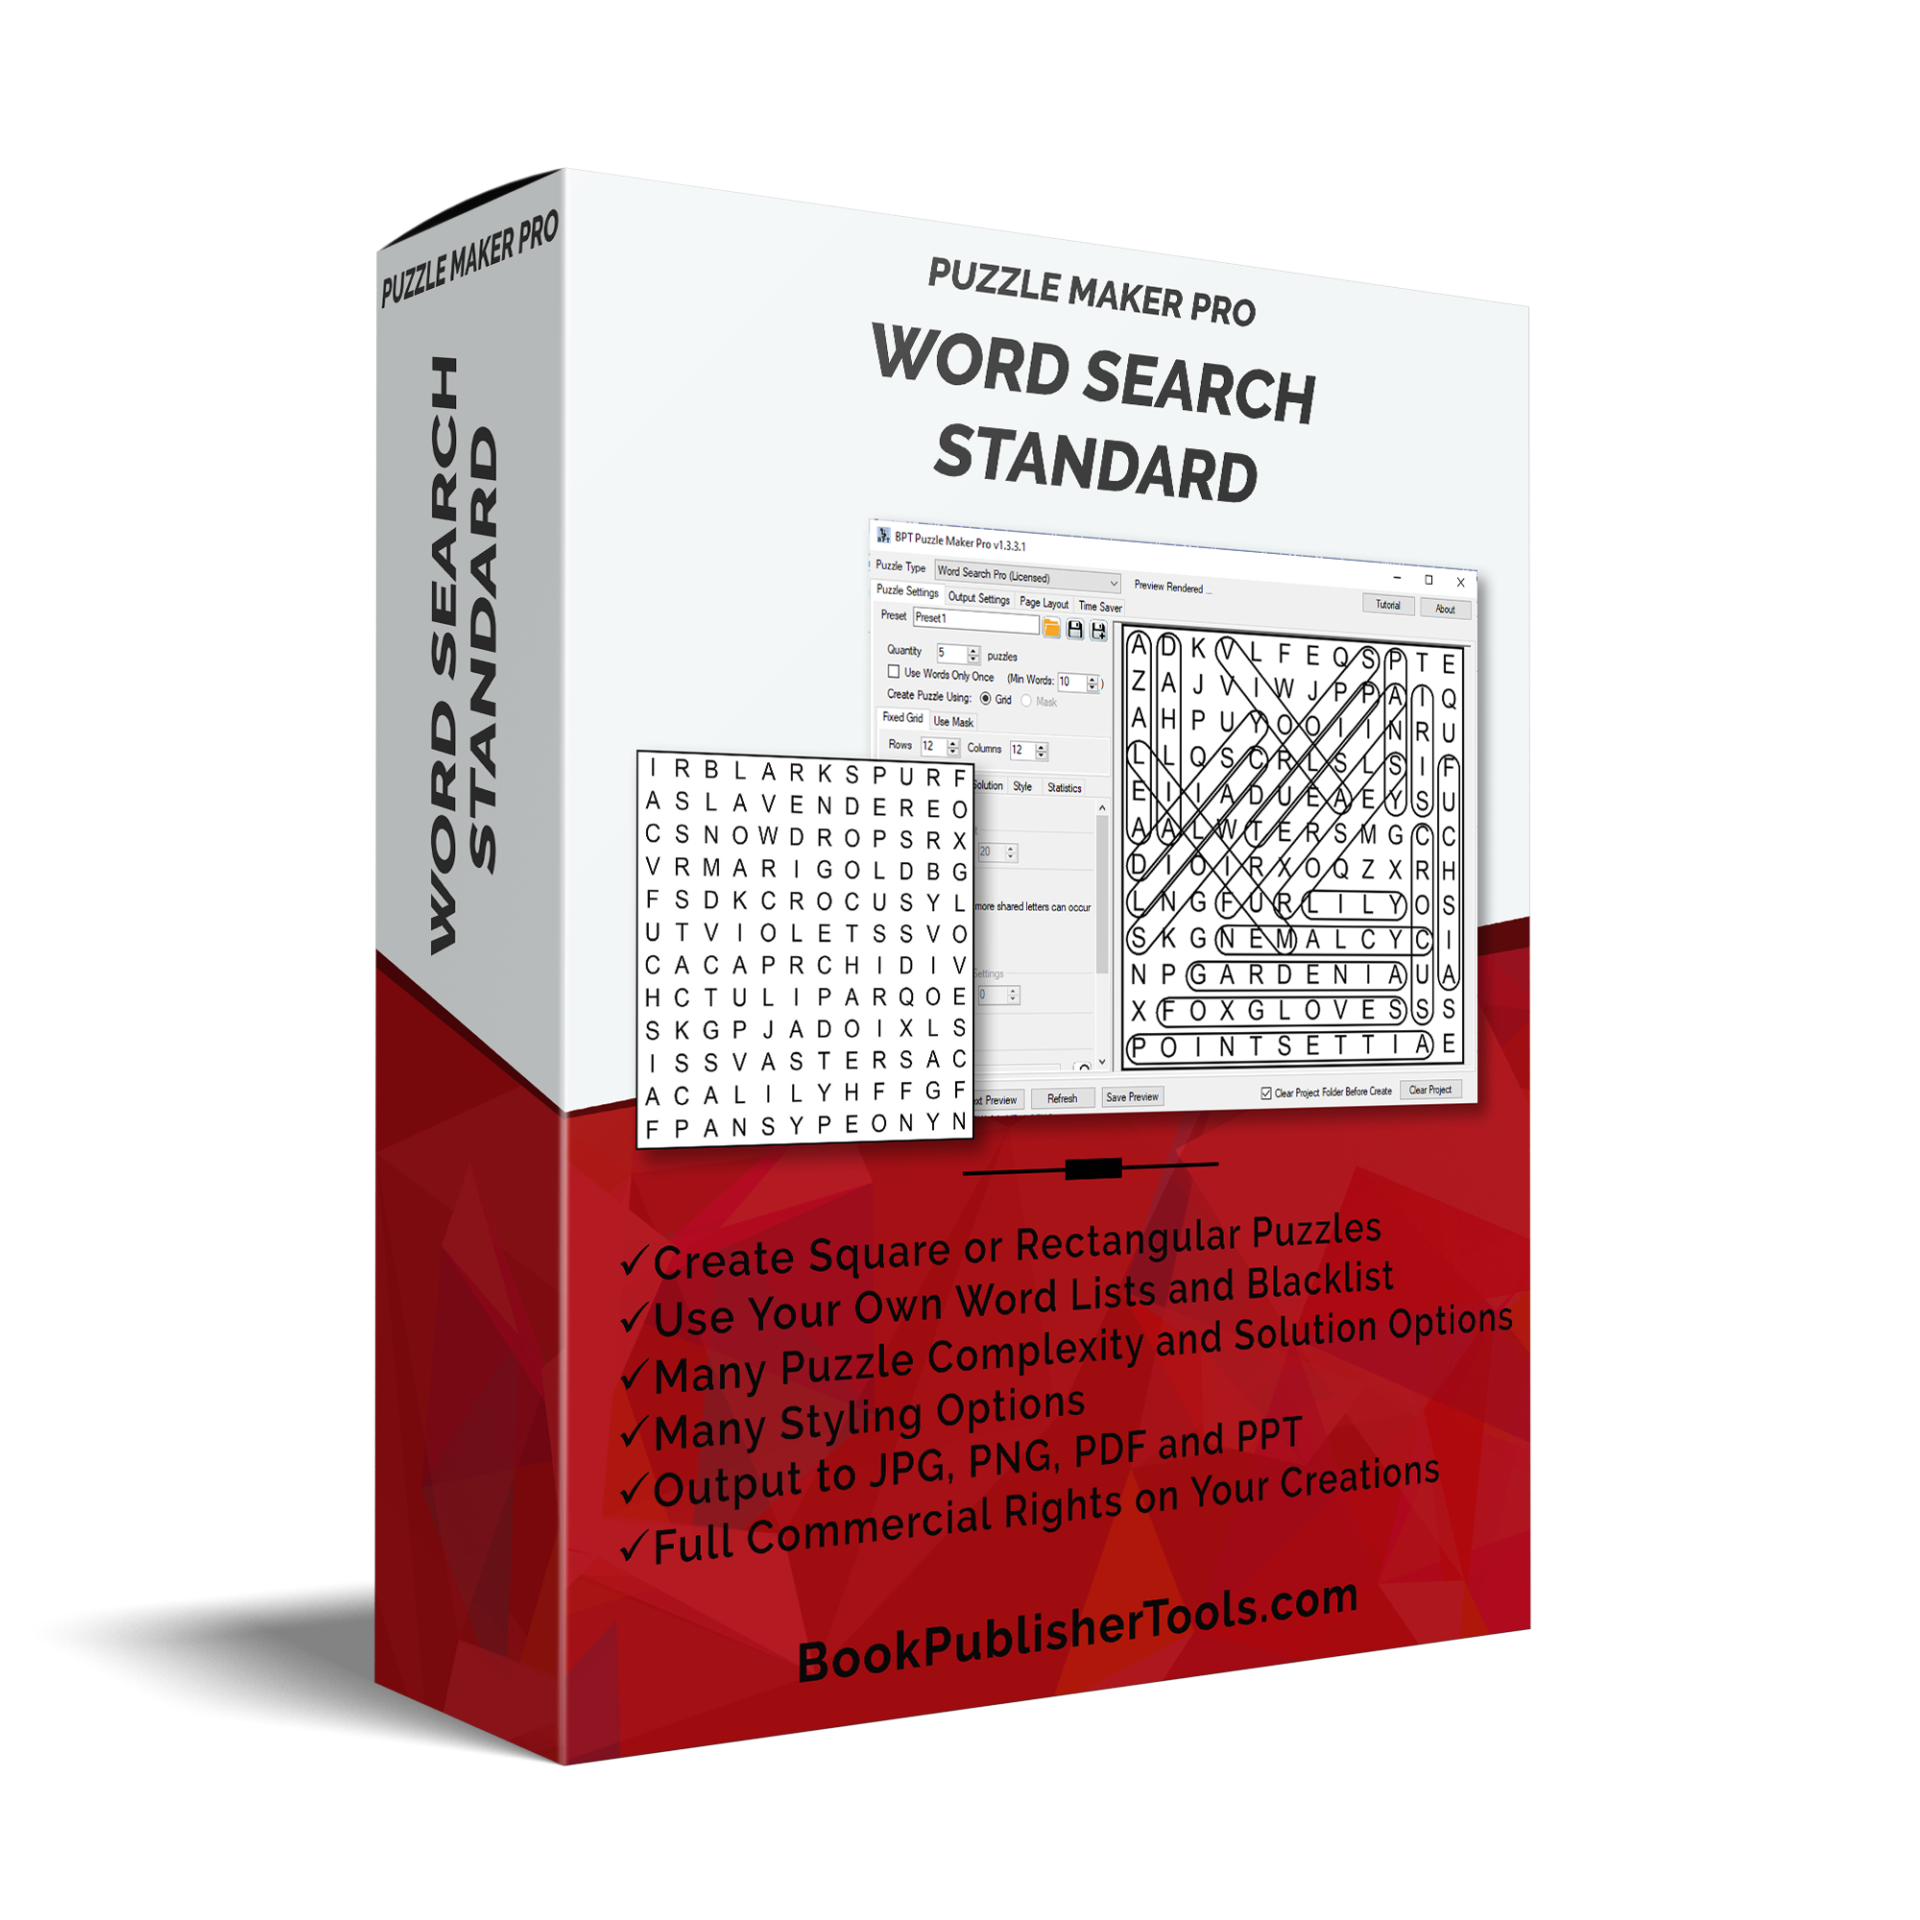 puzzle-maker-pro-word-search-standard-bookpublishertools